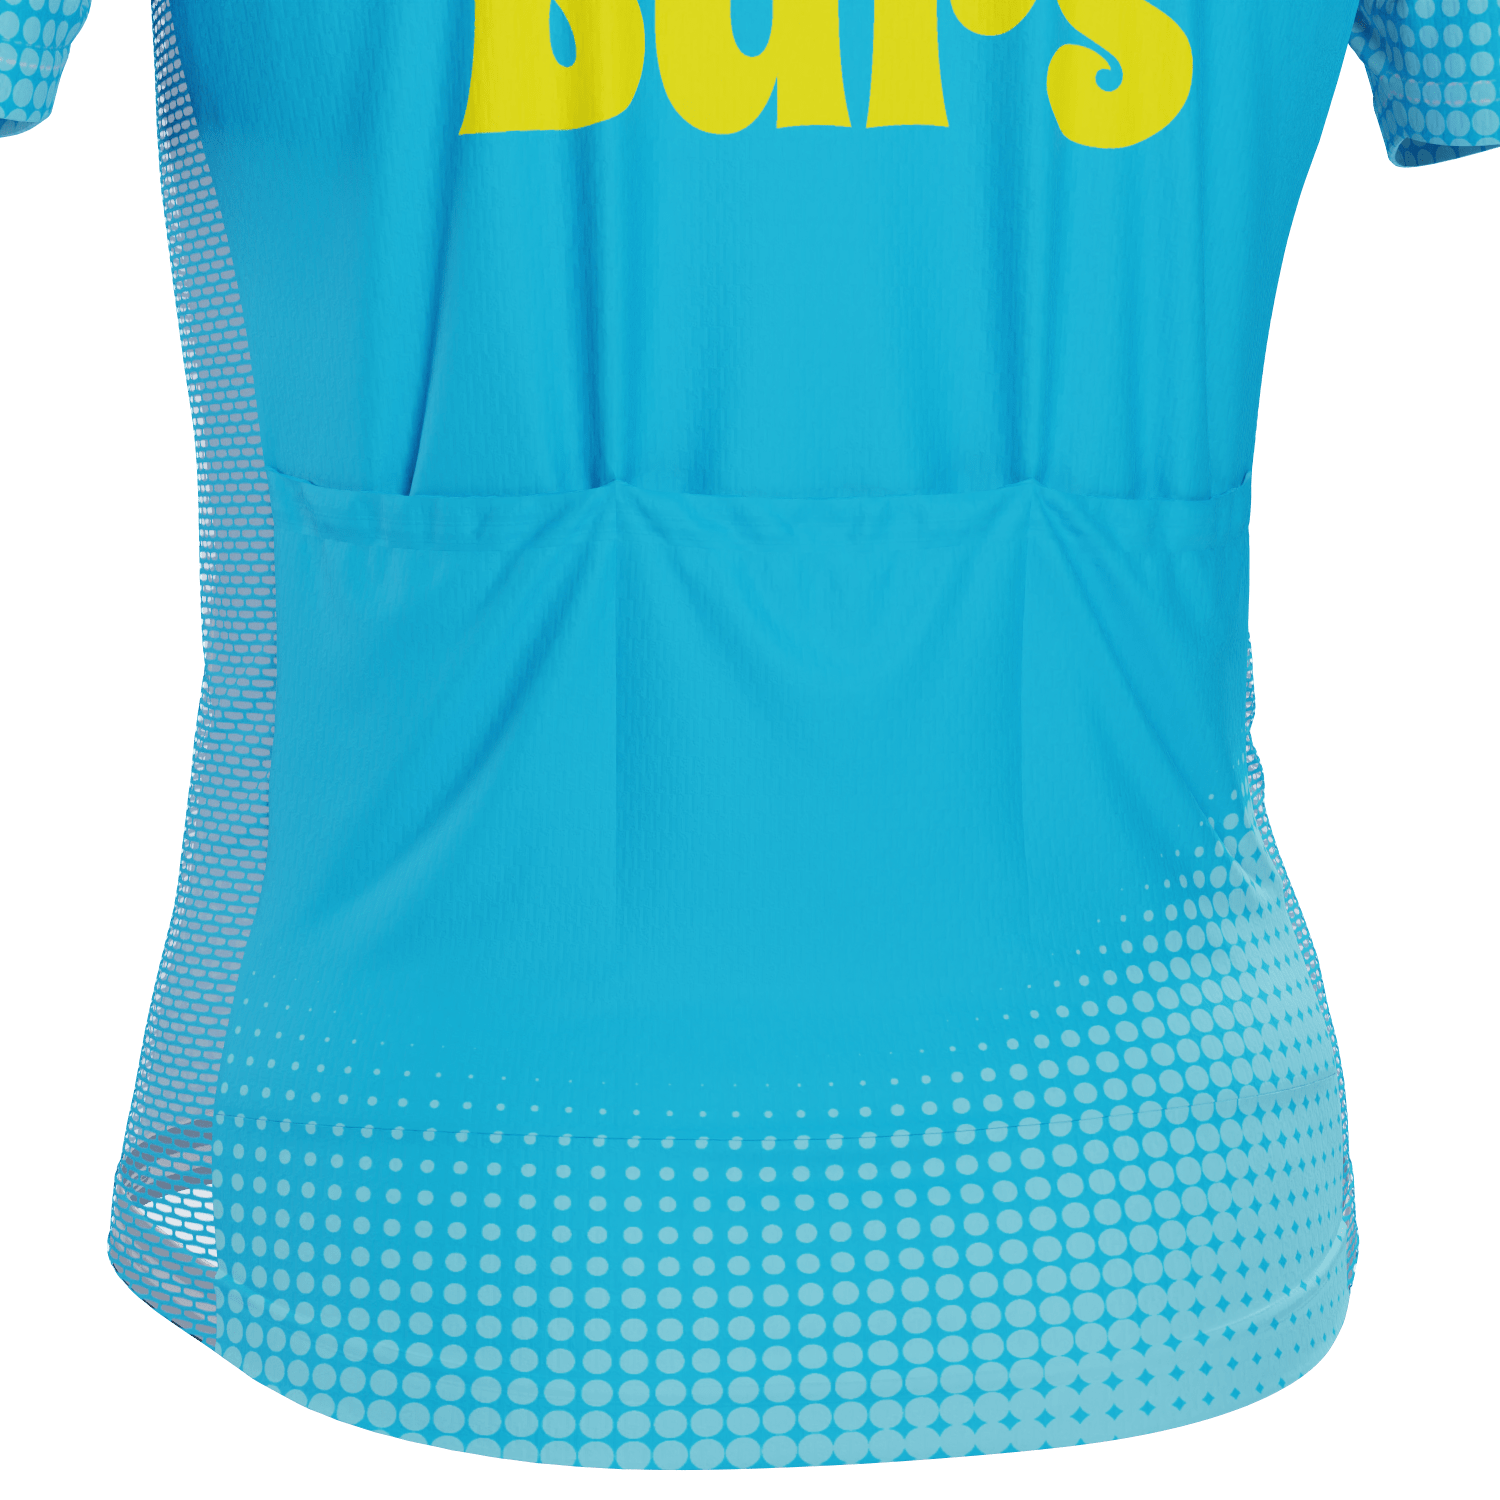 Men's Life Behind Bars Short Sleeve Cycling Jersey